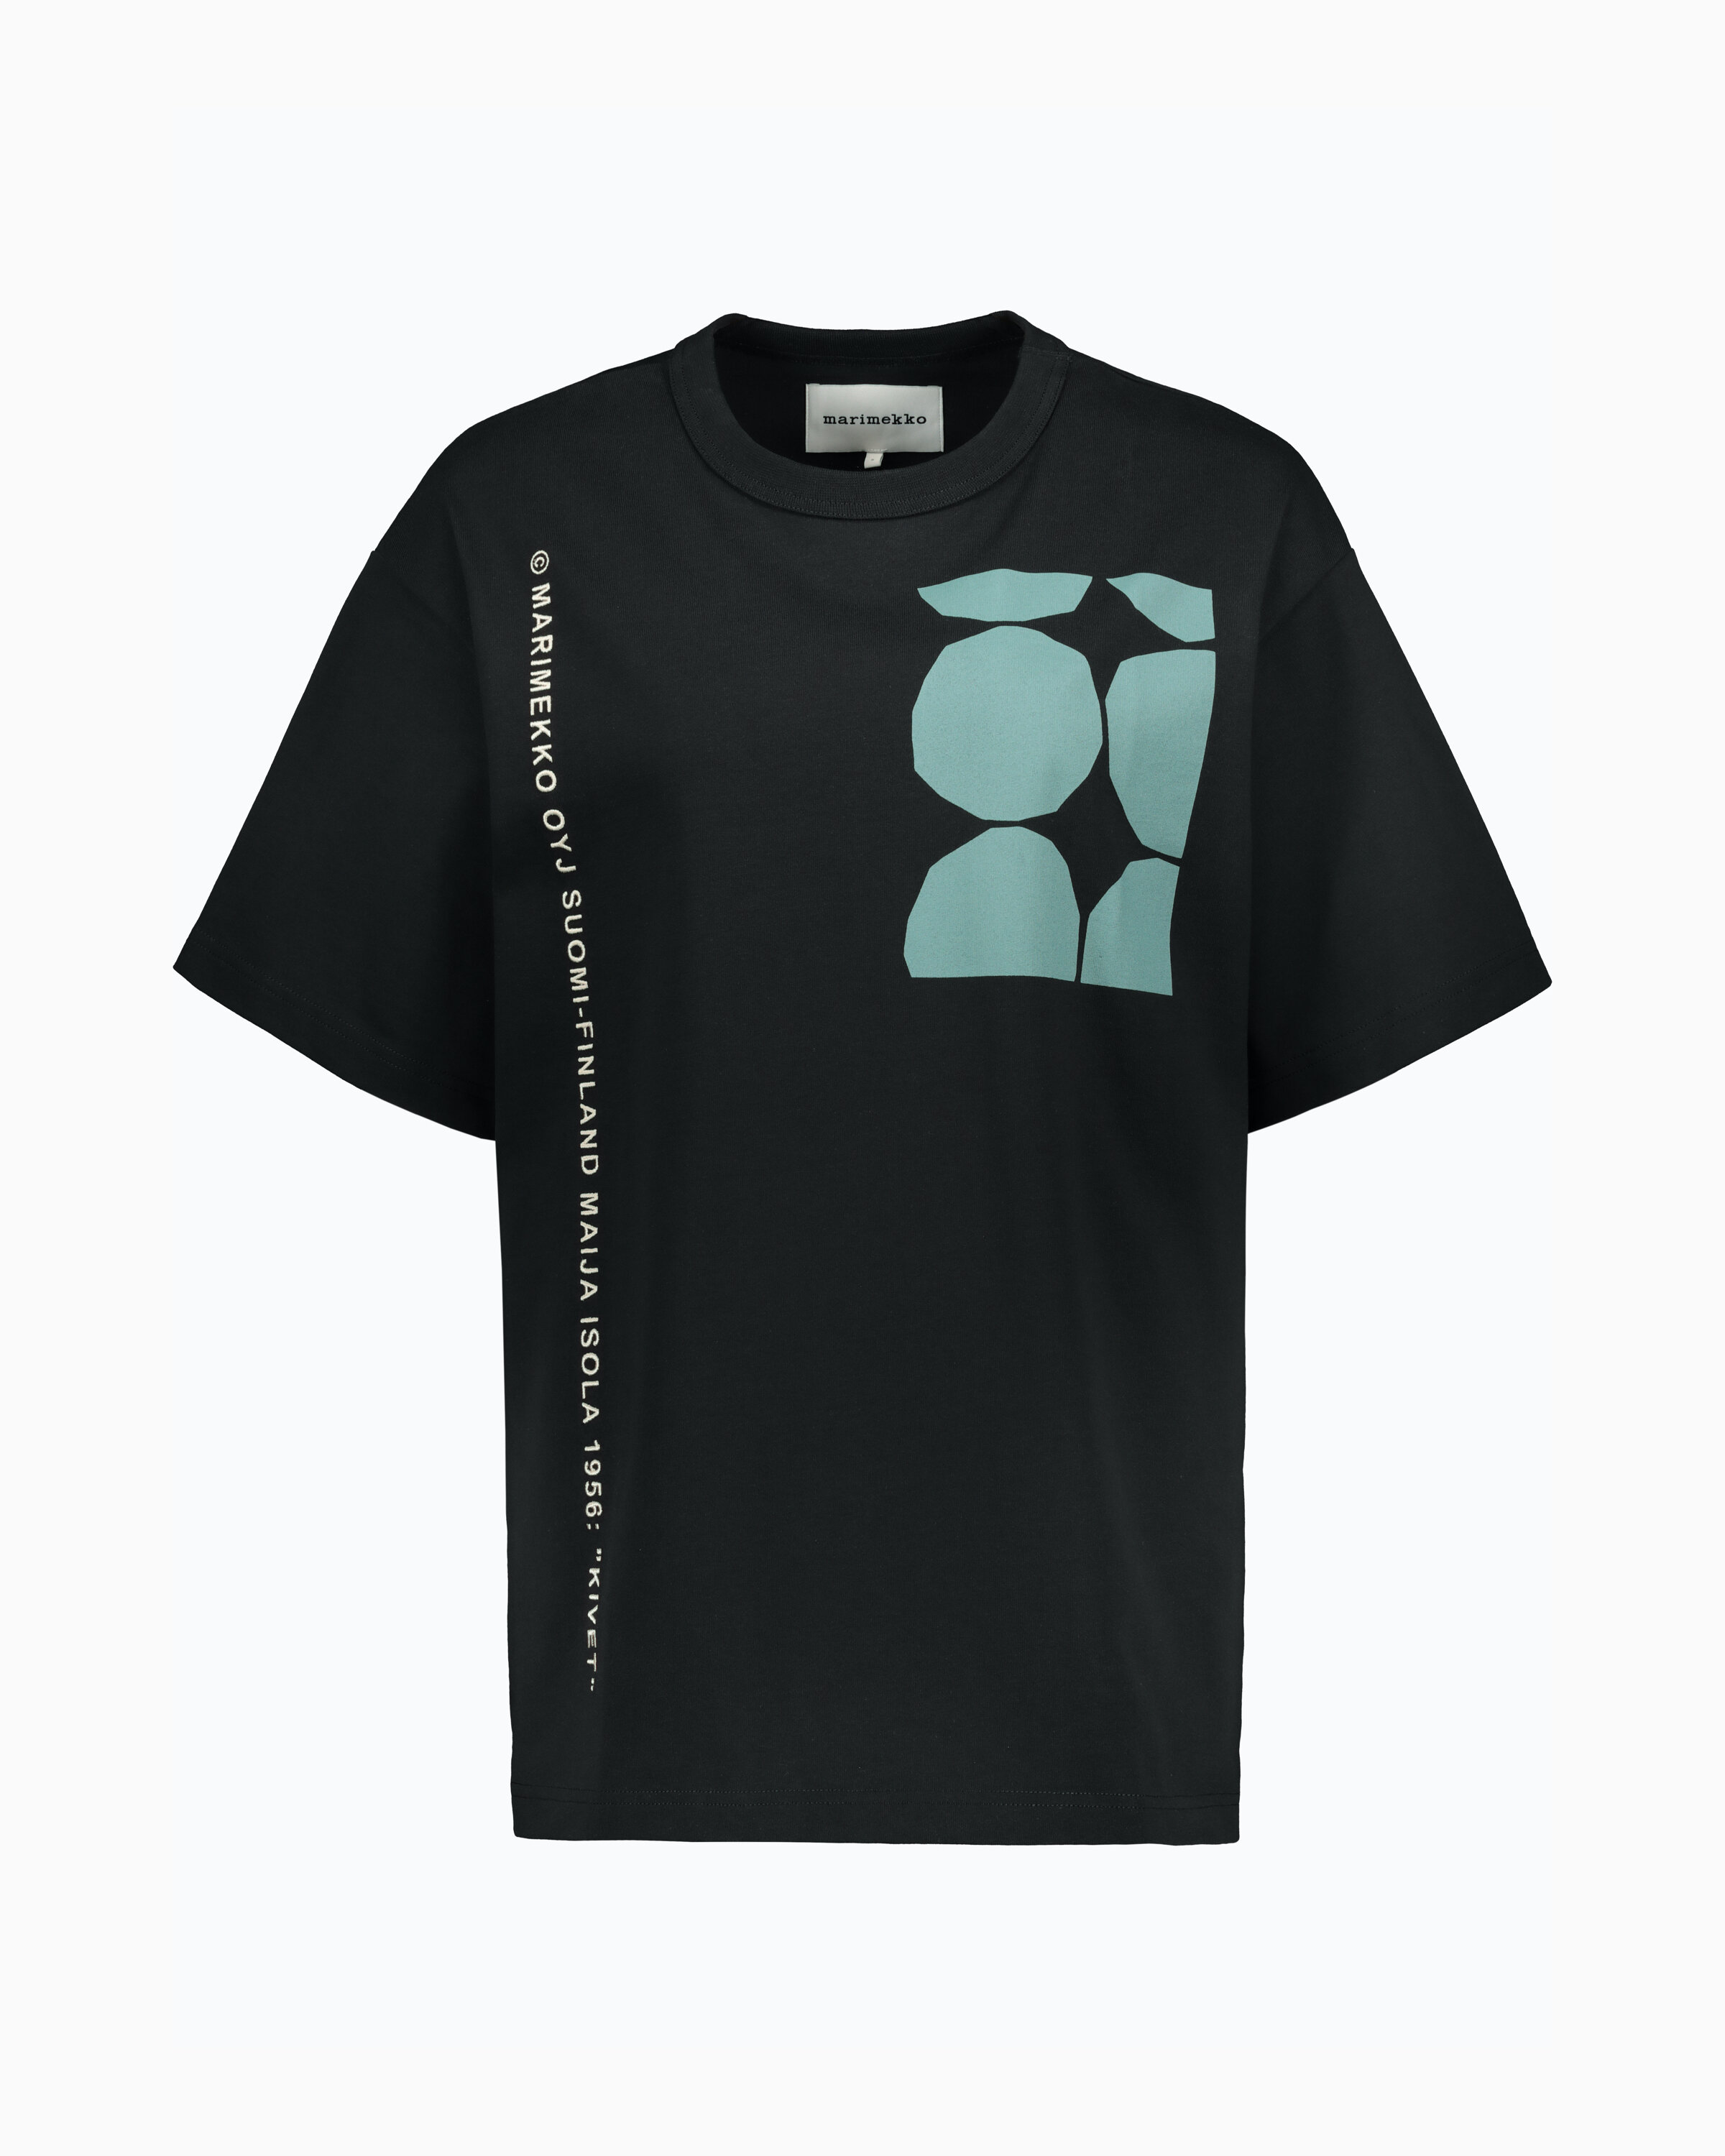 Marimekko Co-Created Black Tshirt